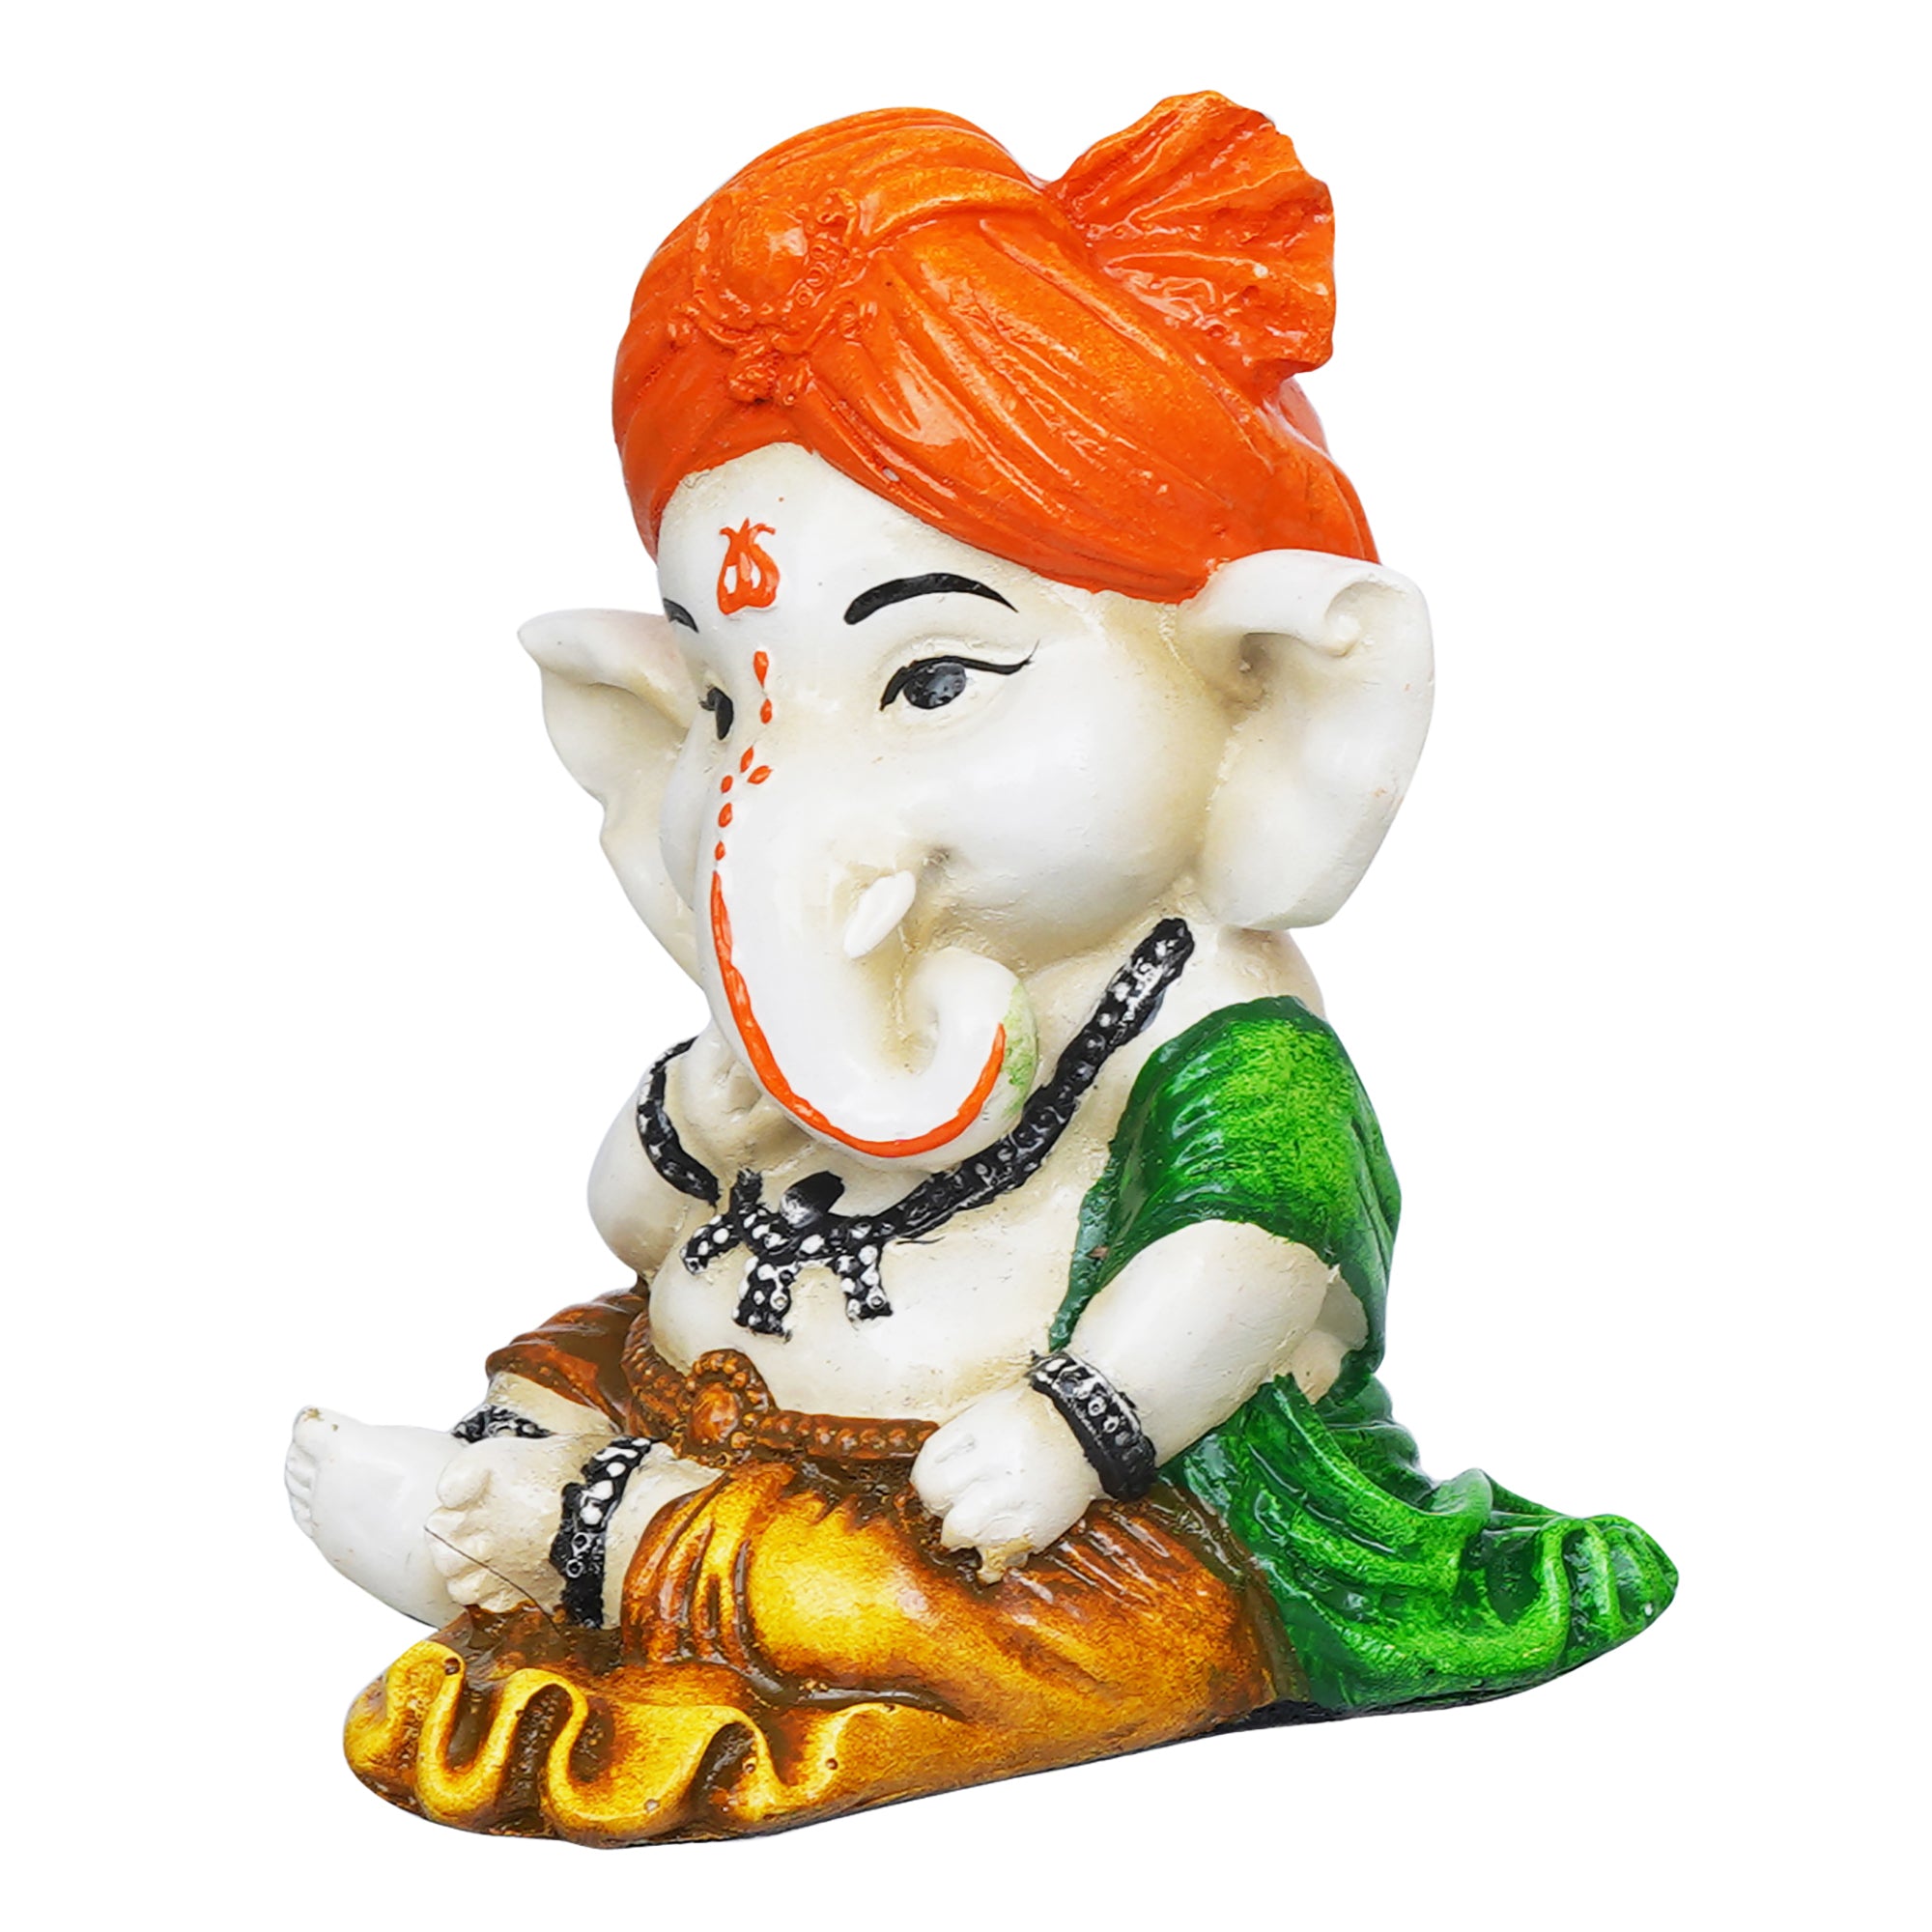 eCraftIndia Orange Polyresin Handcrafted Eating Lord Ganesha Idol while Sitting 6